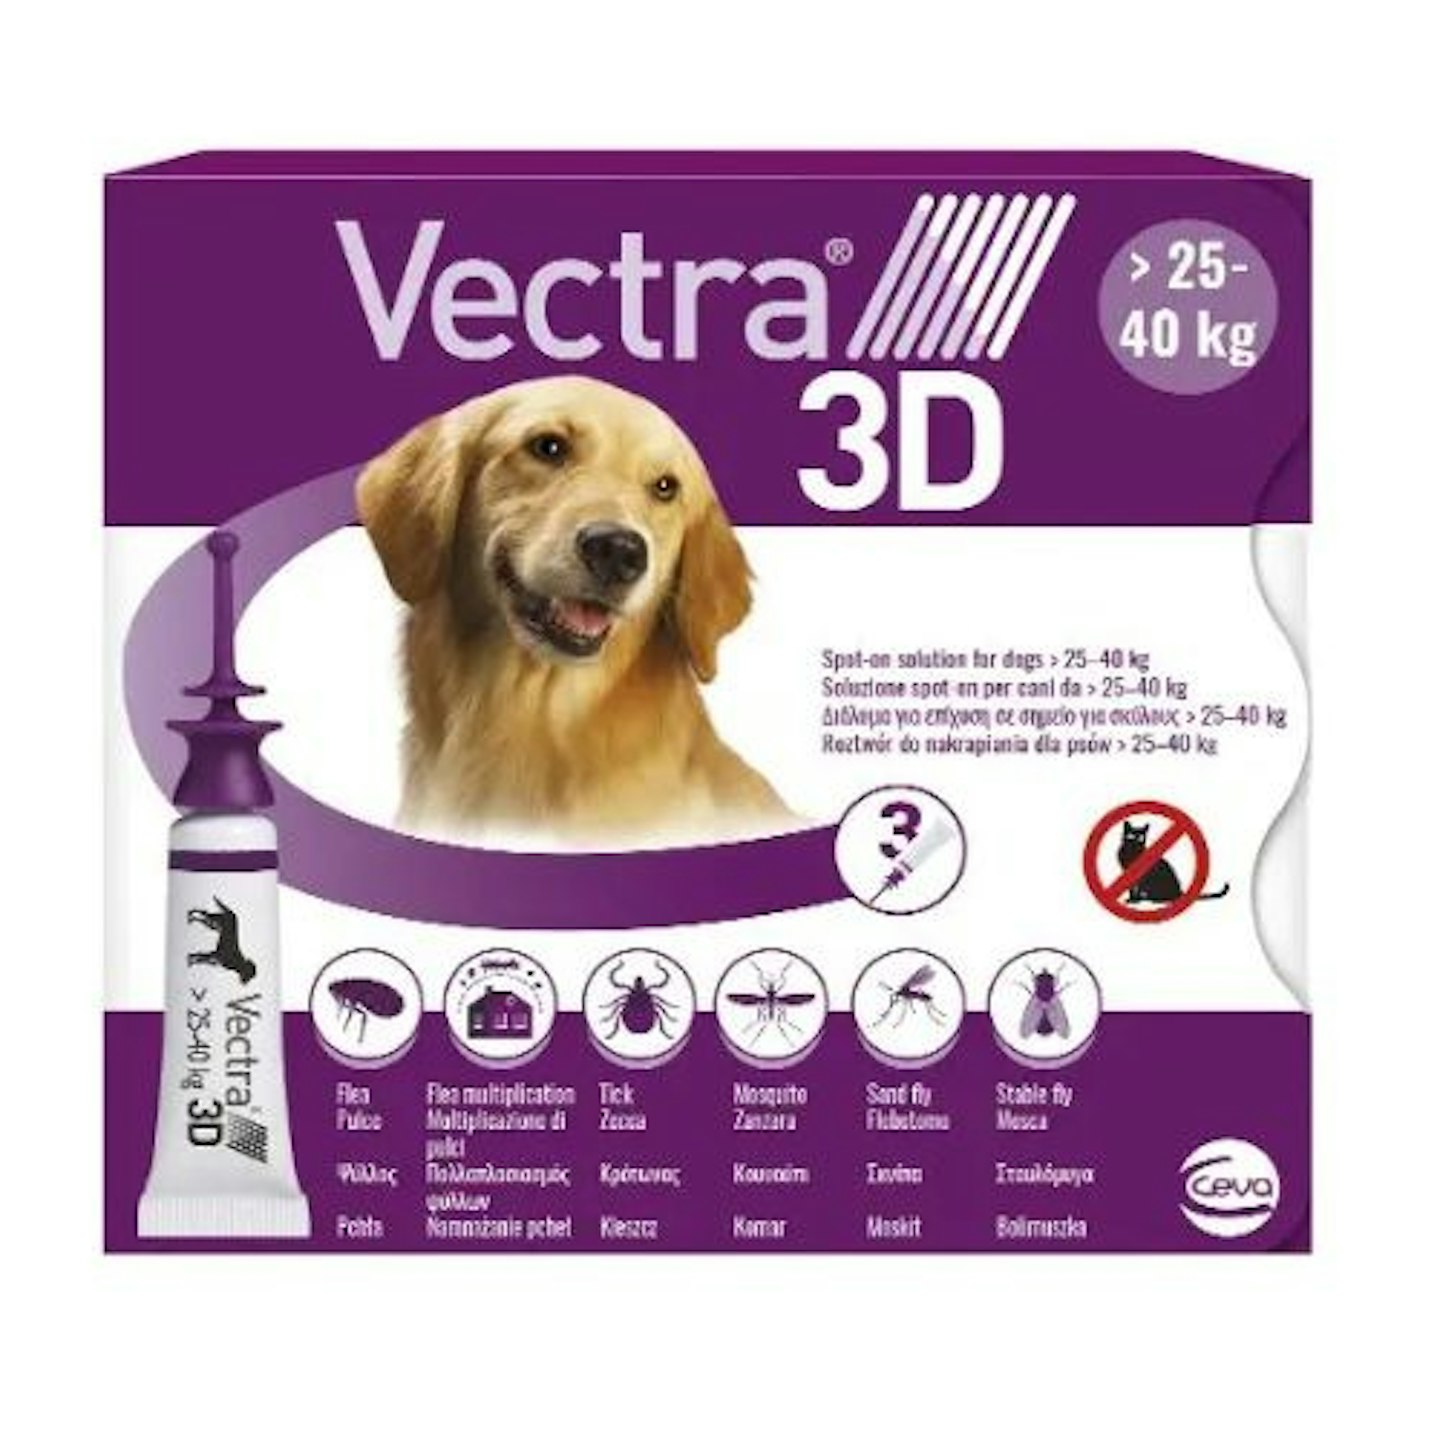 Vextra 3D Spot-On Flea and Tick Treatment